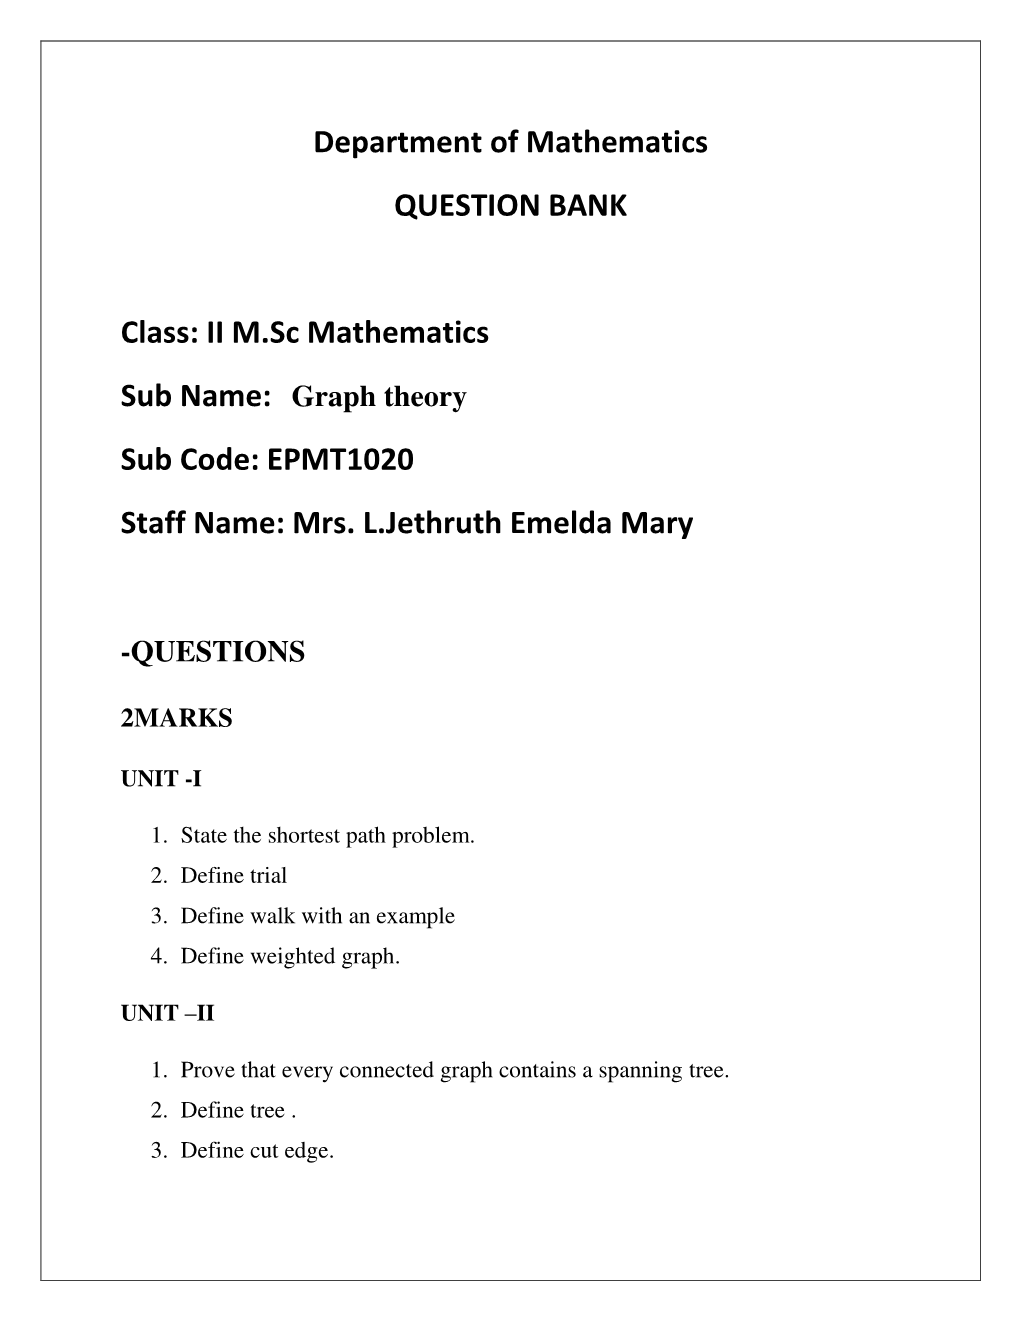 Department of Mathematics QUESTION BANK Class: II M.Sc Mathematics Sub Code: EPMT1020 Staff Name: Mrs. L.Jethruth Emelda